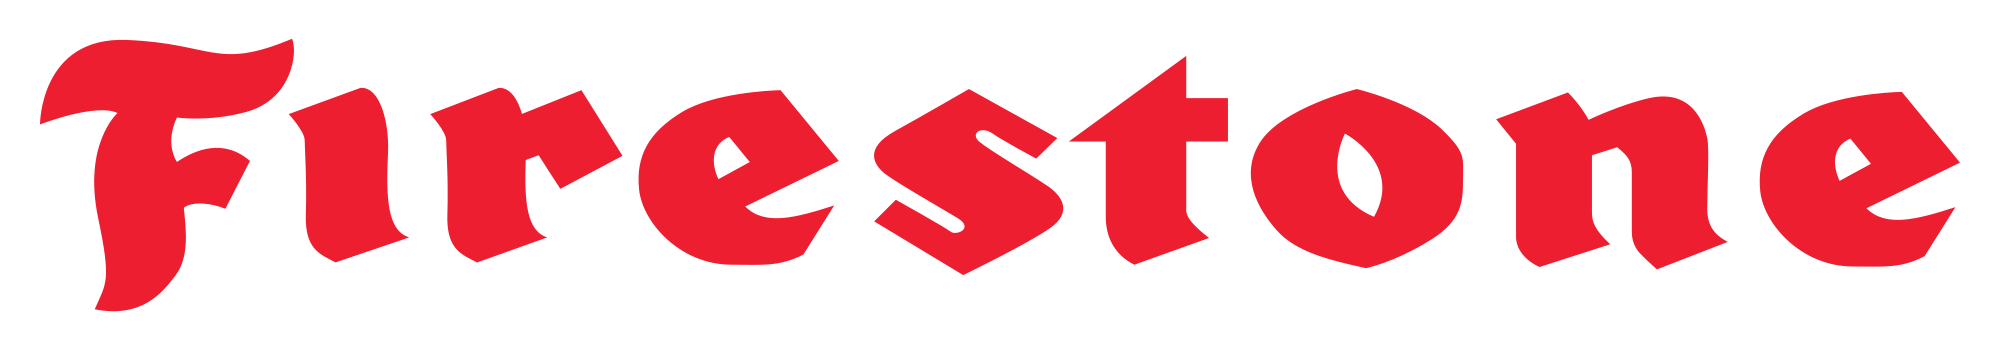 Firestone Logo PNG - 175052